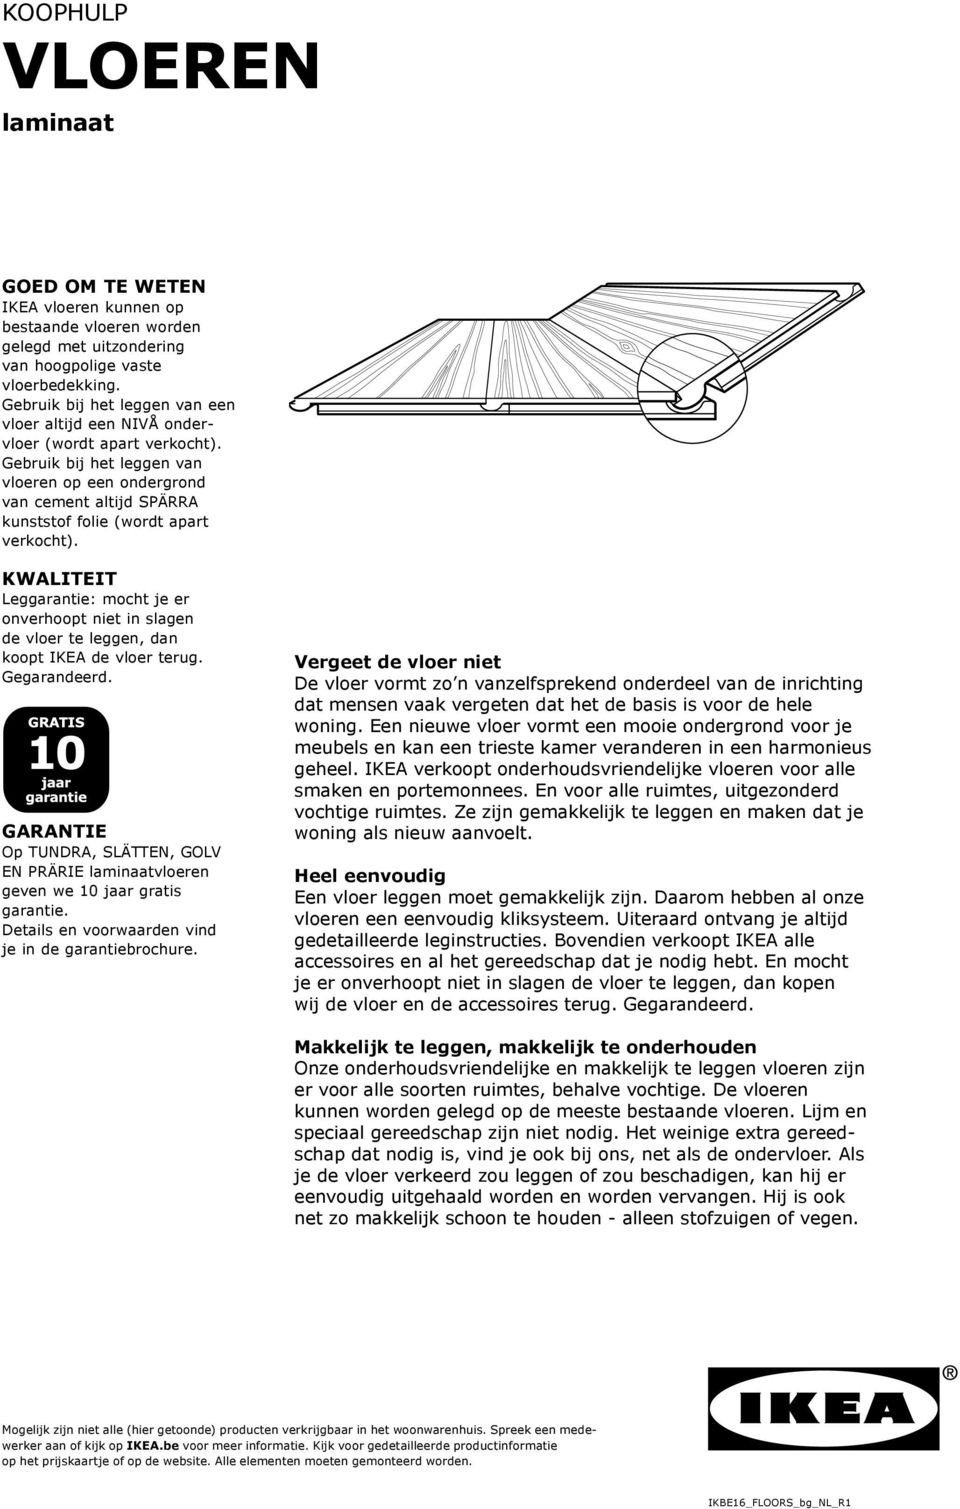 design and quality ikea of sweden koophulp vloeren laminaat pdf free download